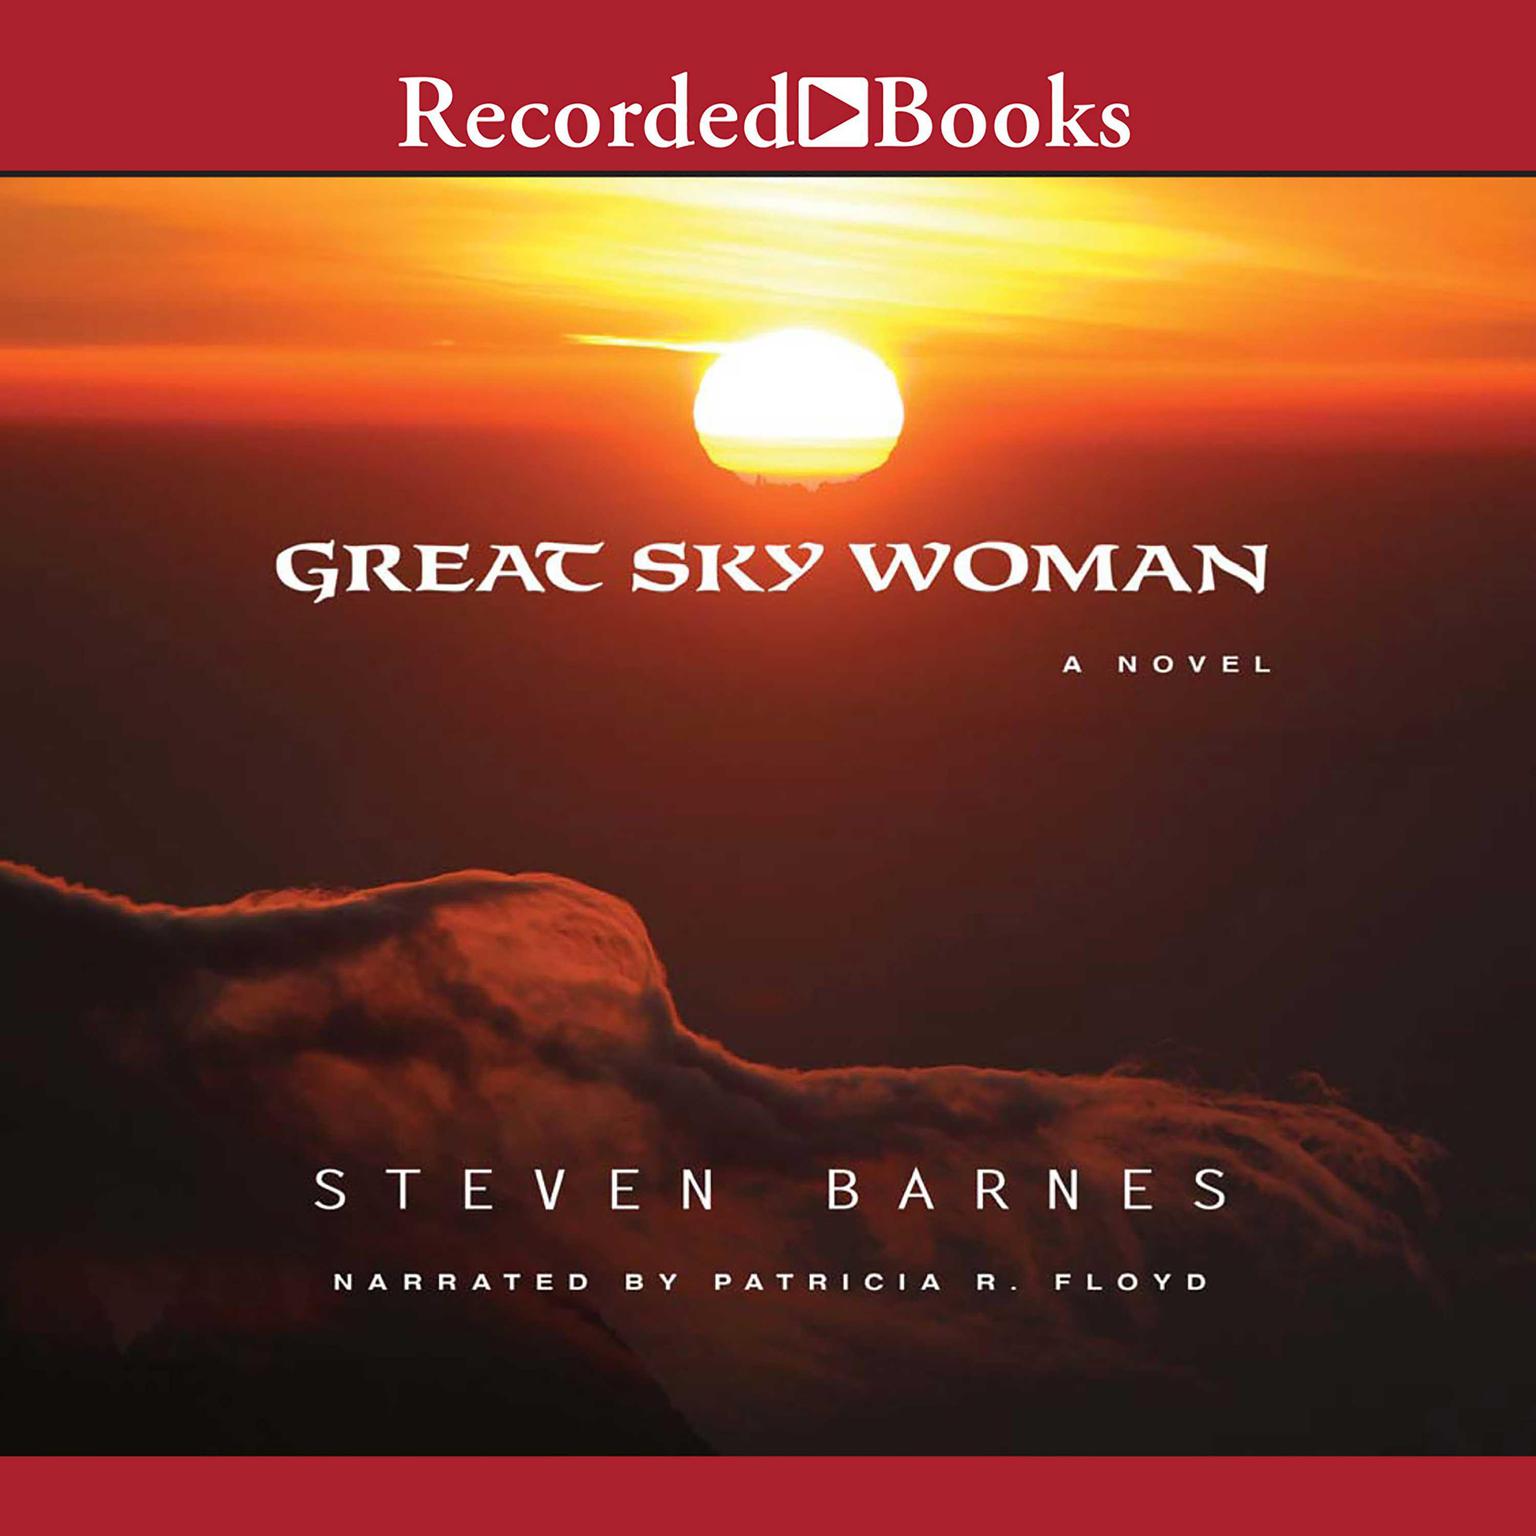 Great Sky Woman Audiobook, by Steven Barnes